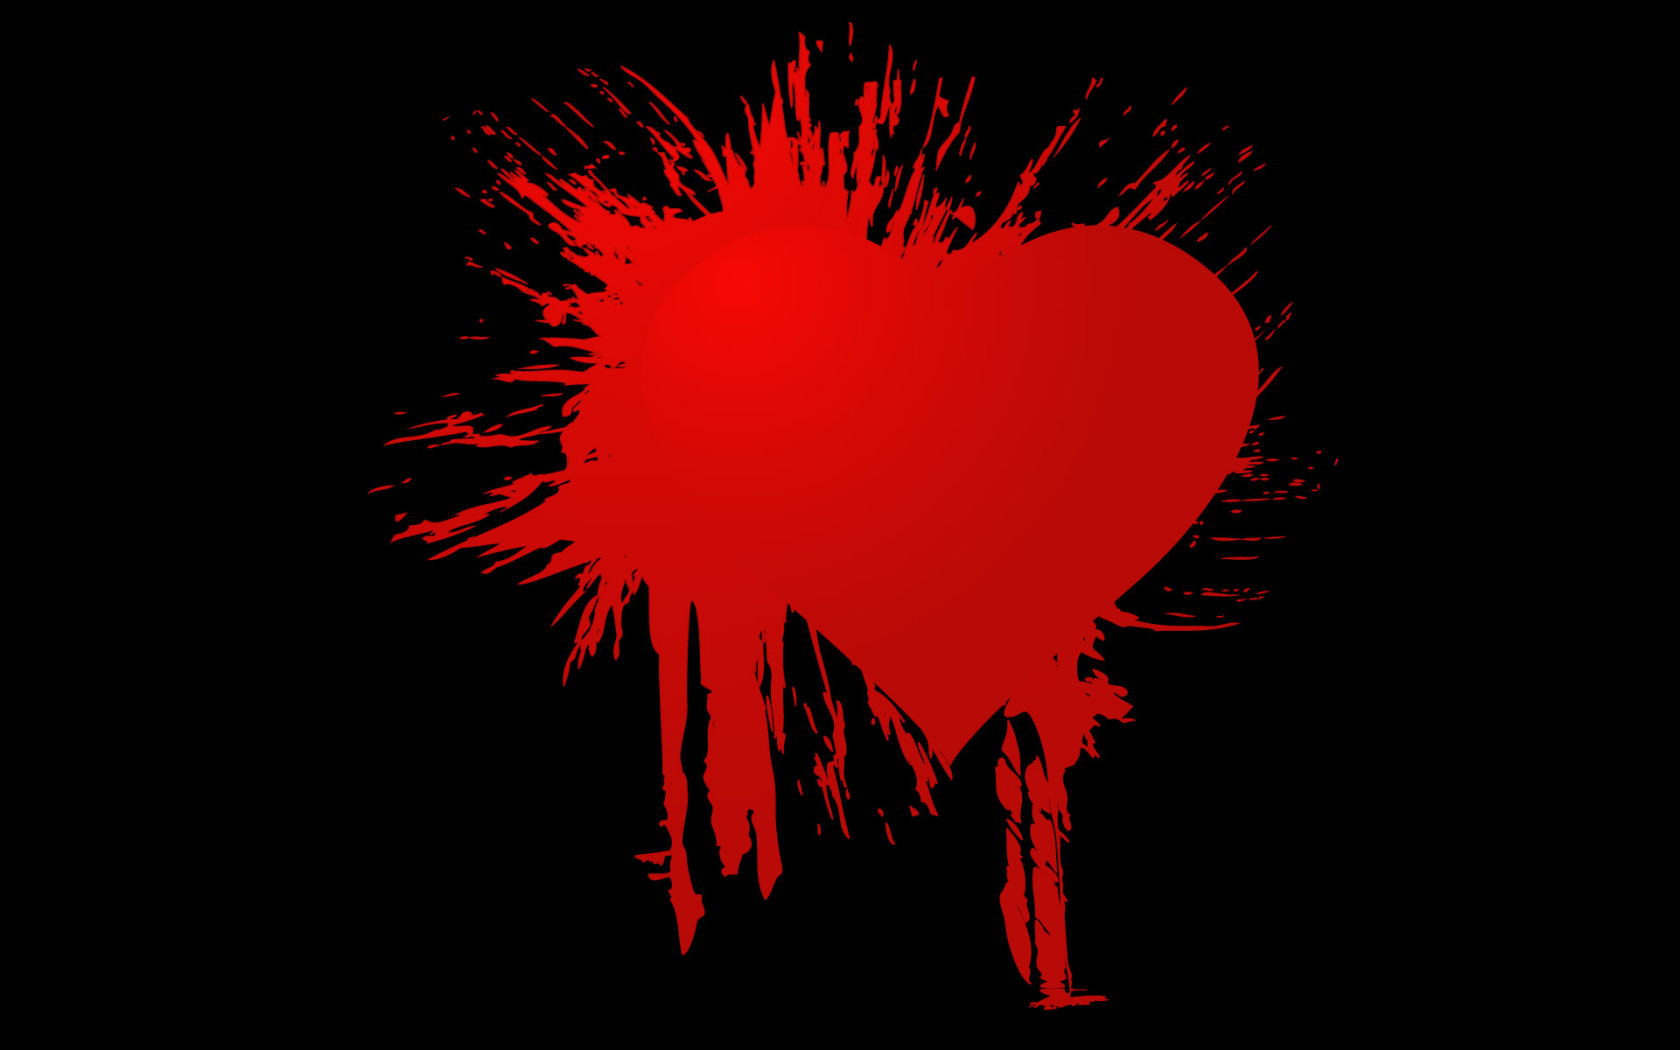 Previous, Holidays - Saint Valentines Day - Broken Heart wallpaper